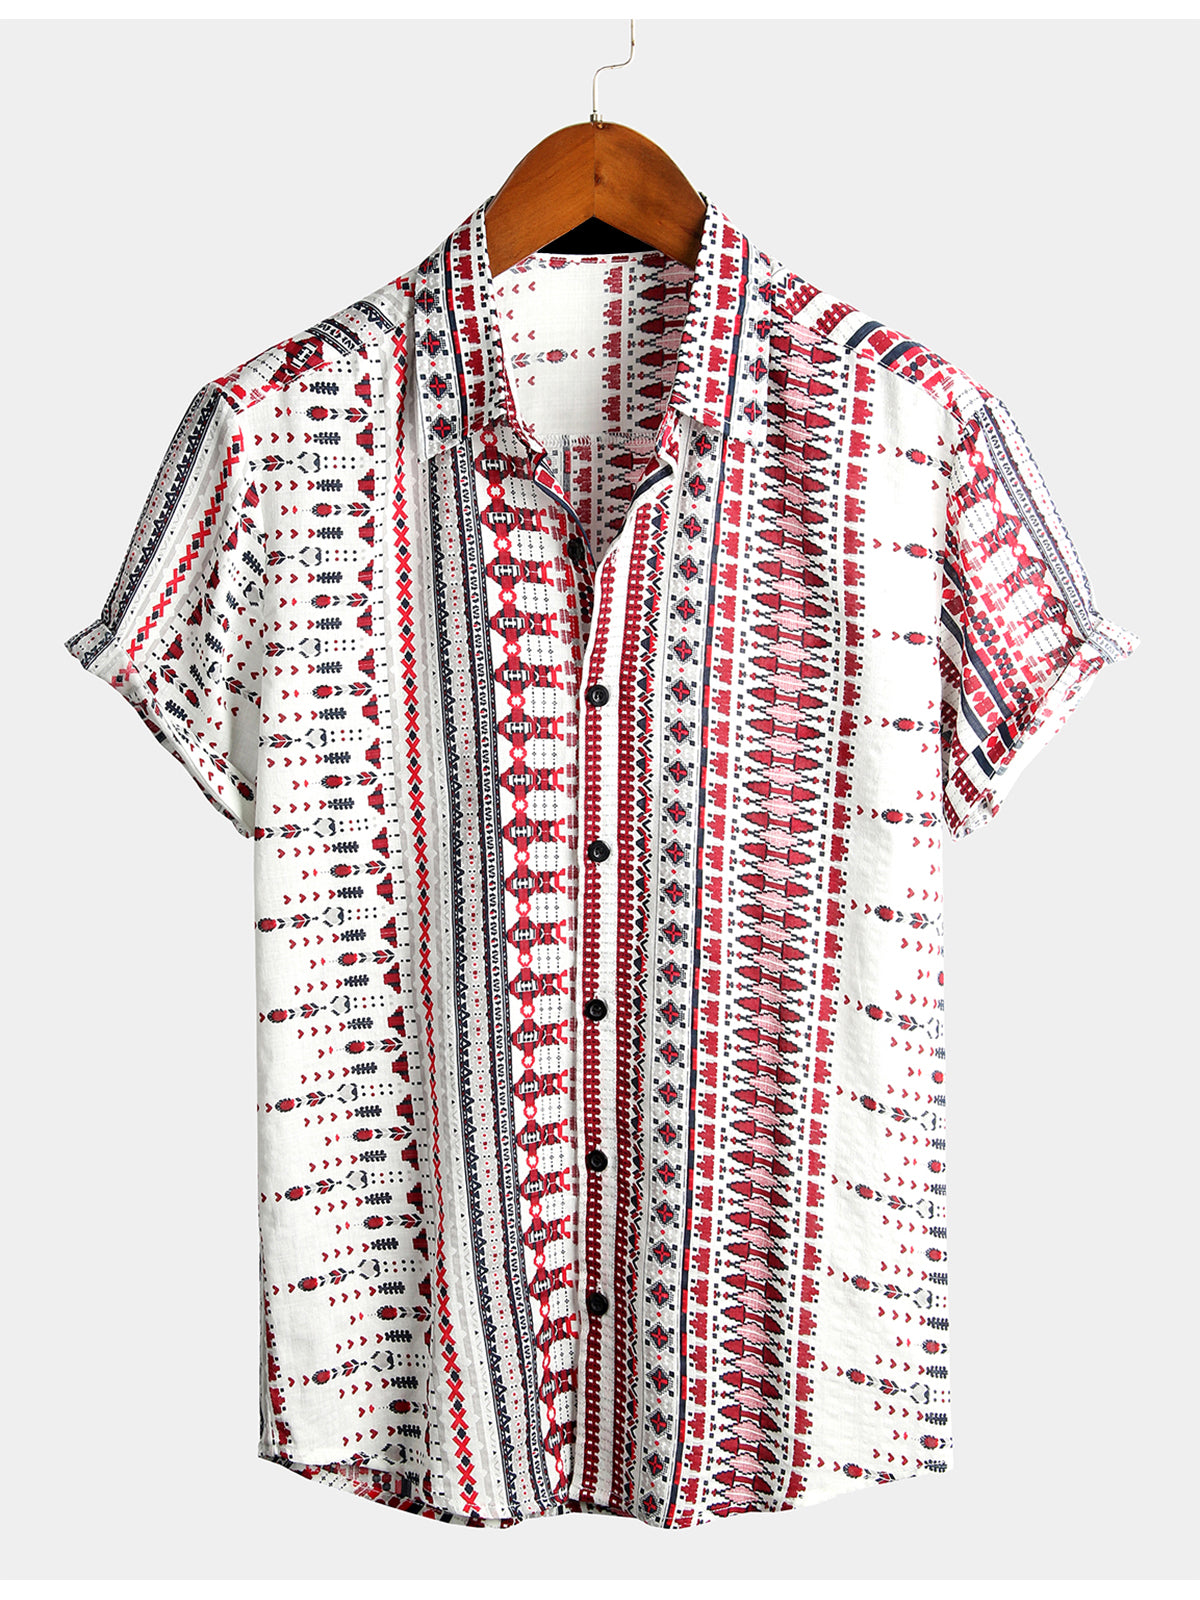 Men's Cotton Basic Printed Short Sleeve Shirt